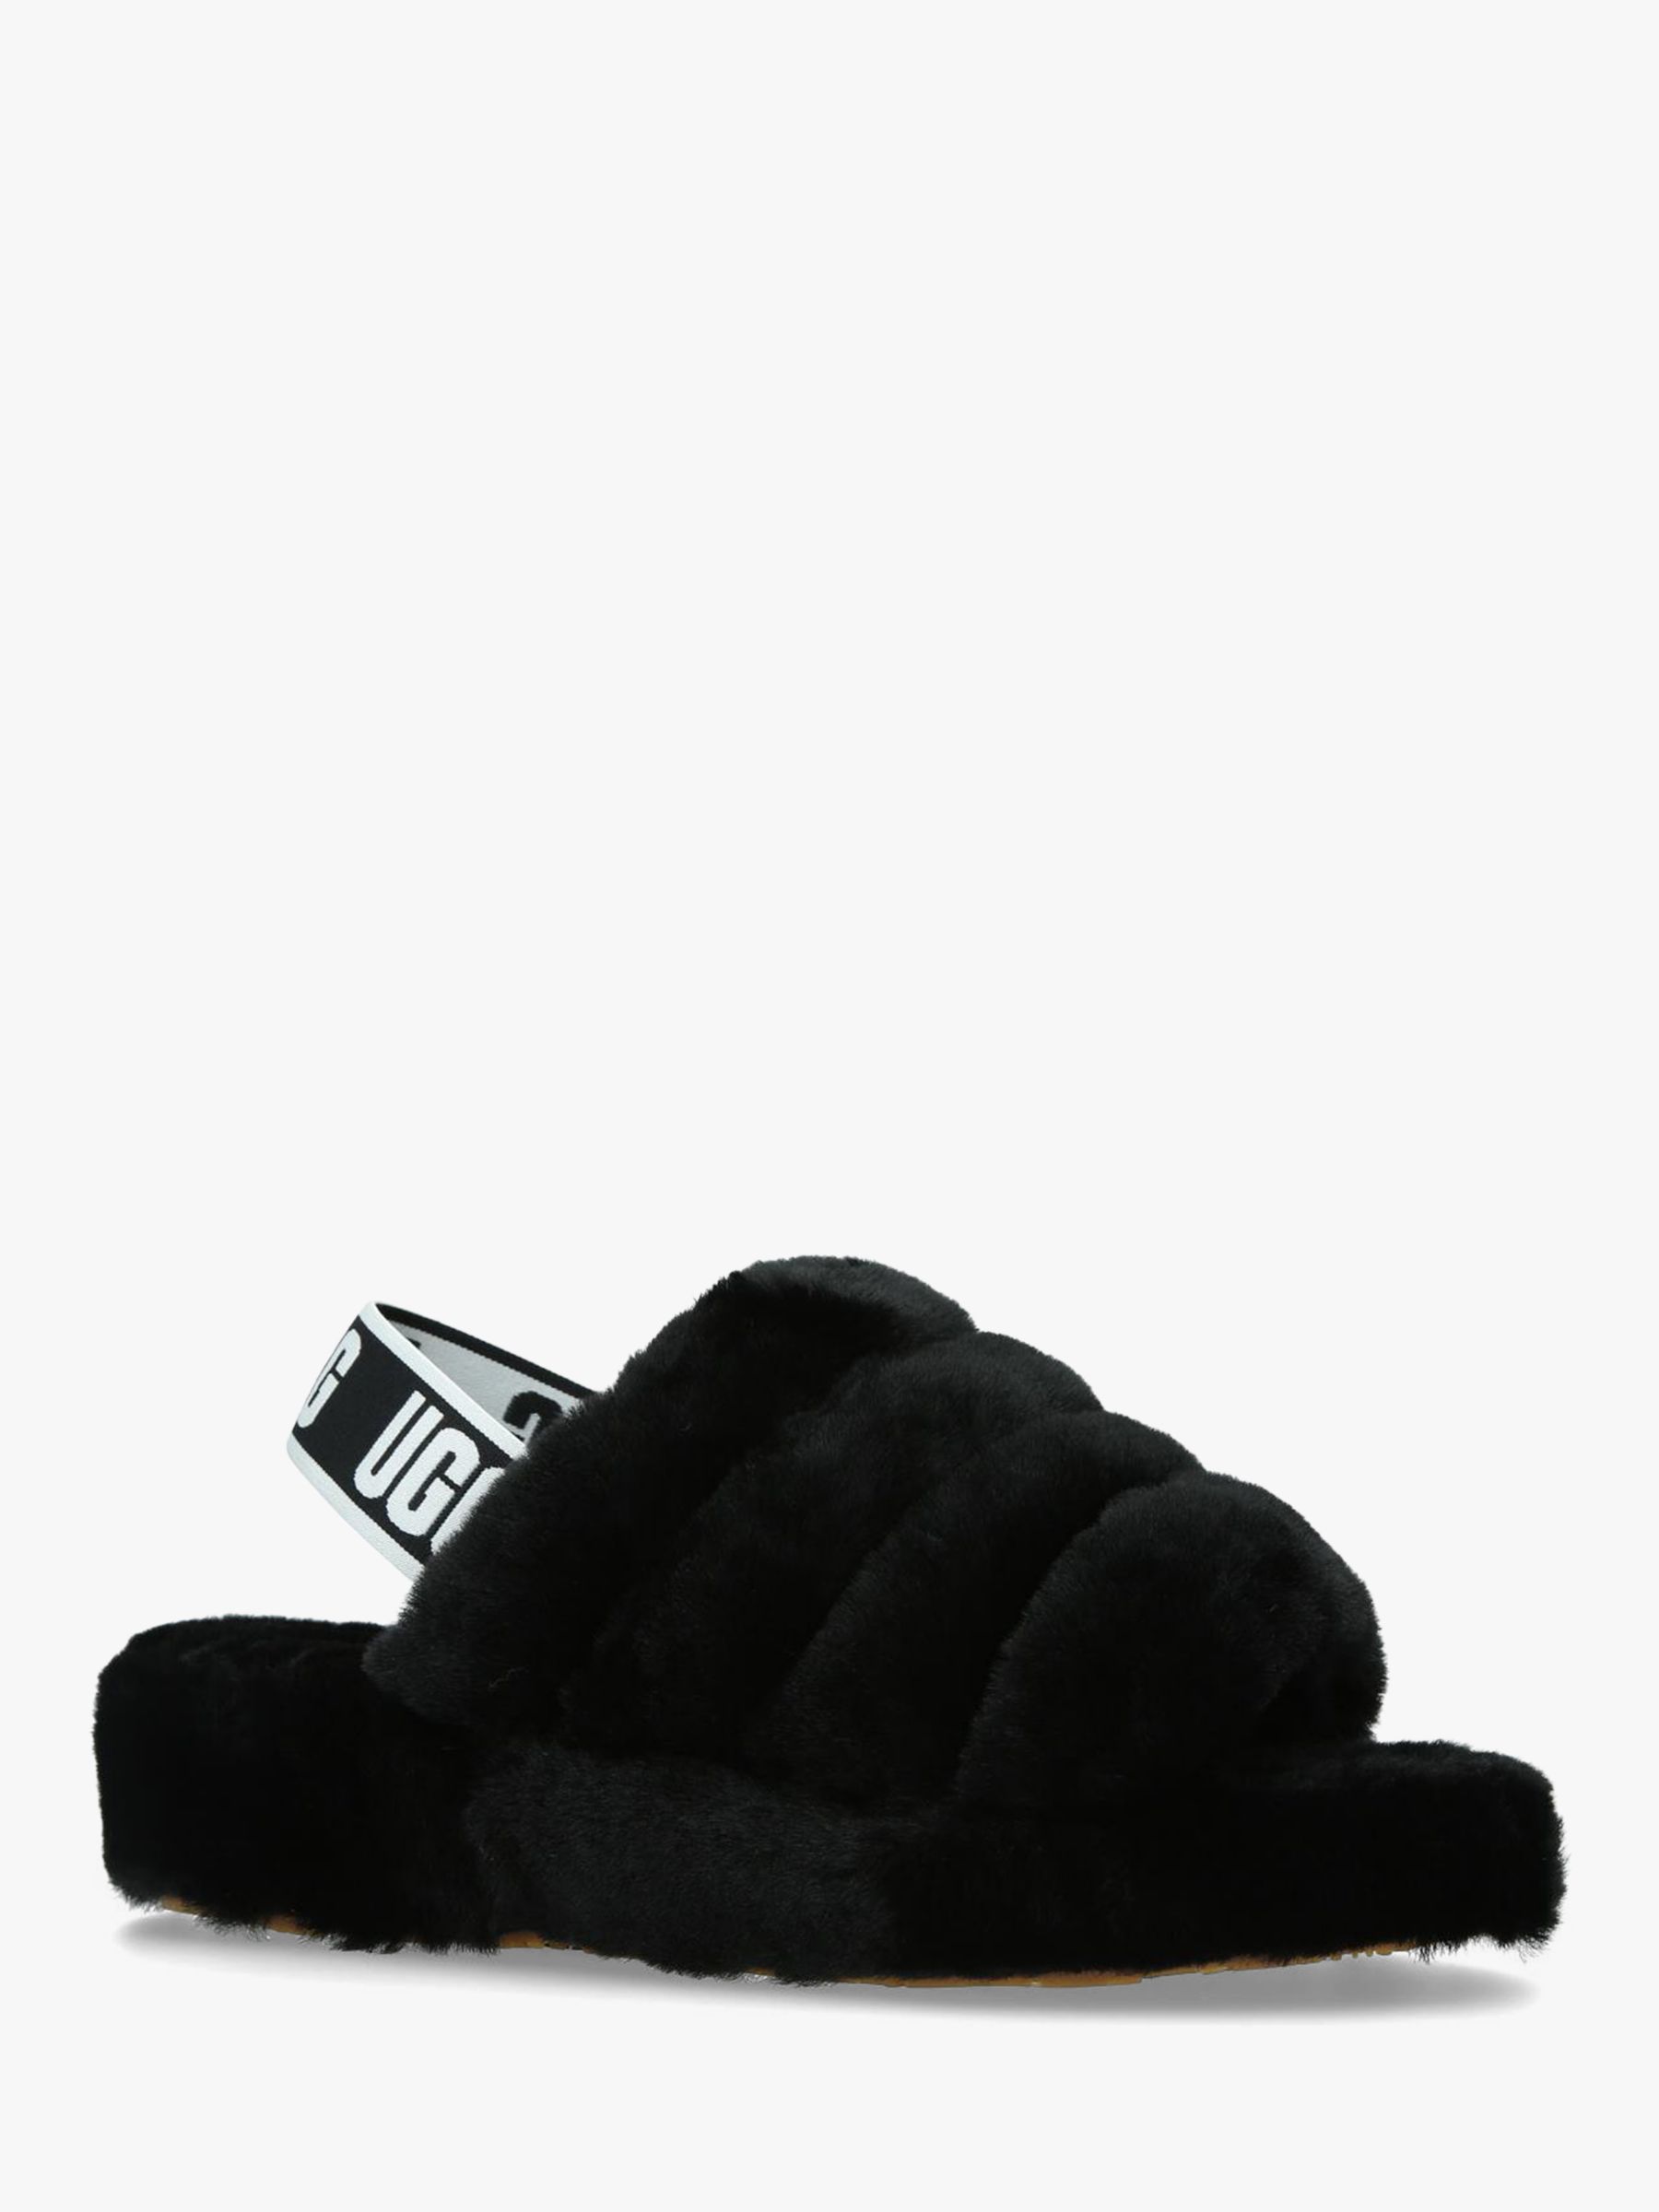 ugg fluff slippers black